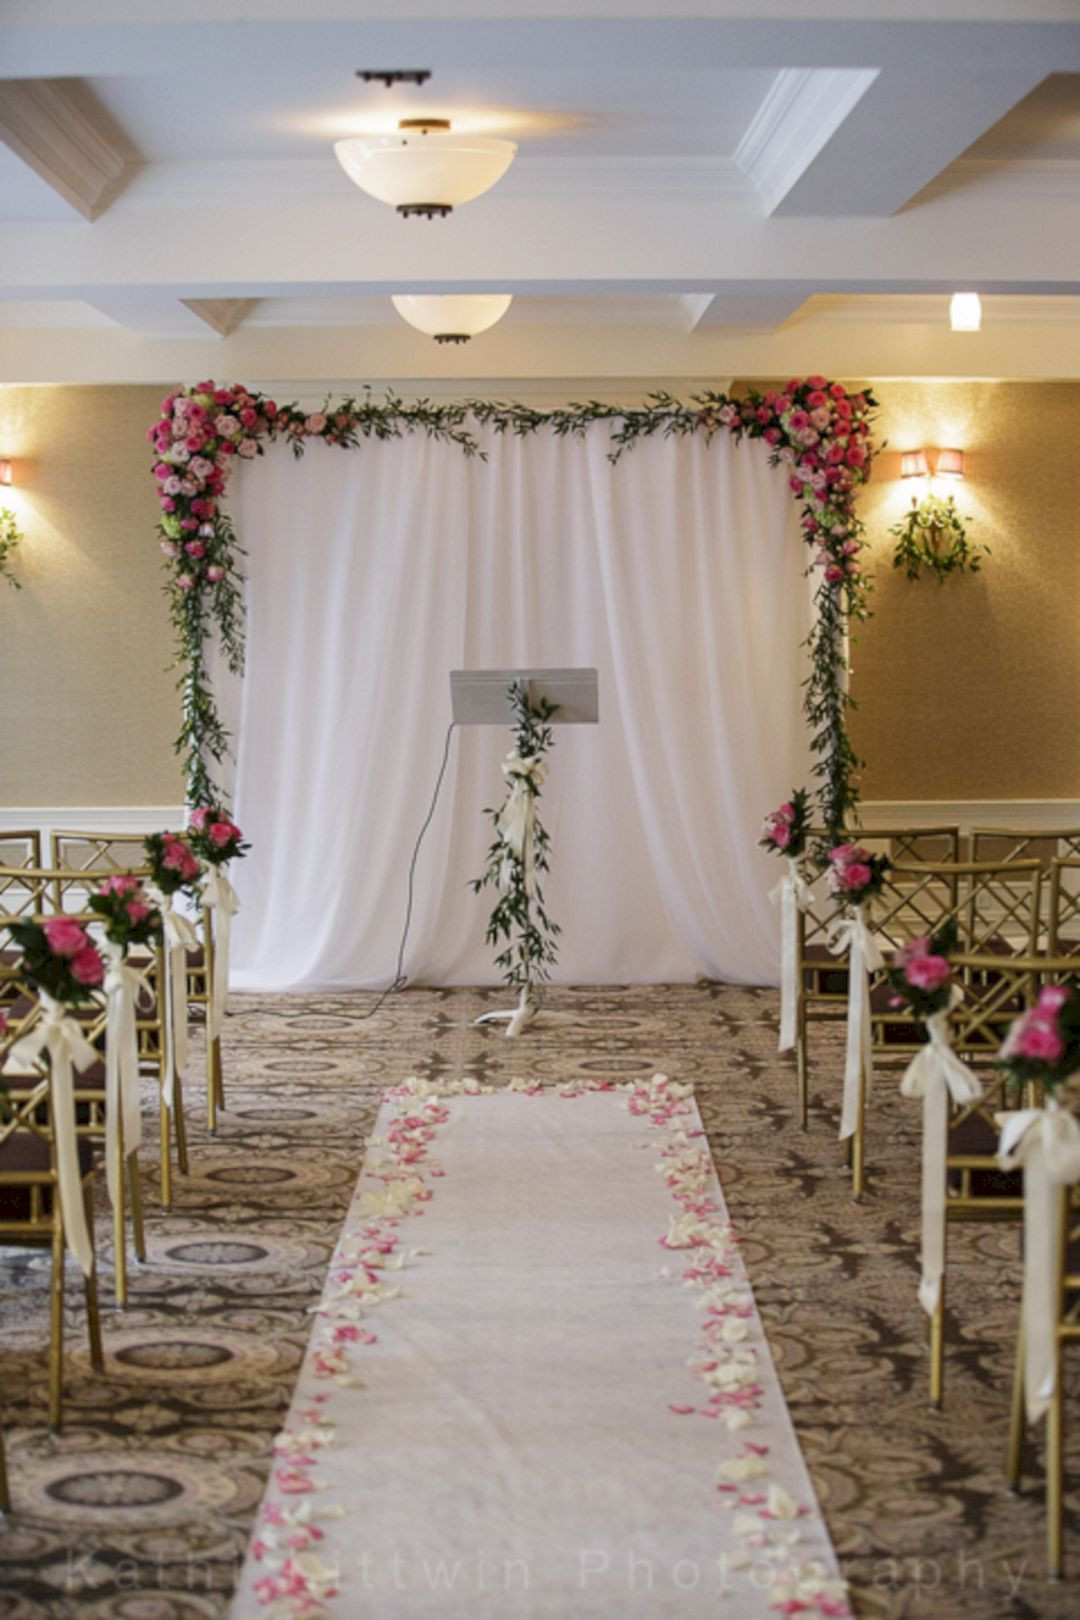 Wedding Backdrop Ideas DIY
 30 Simple Wedding Backdrop Ideas For Your Wedding Ceremony